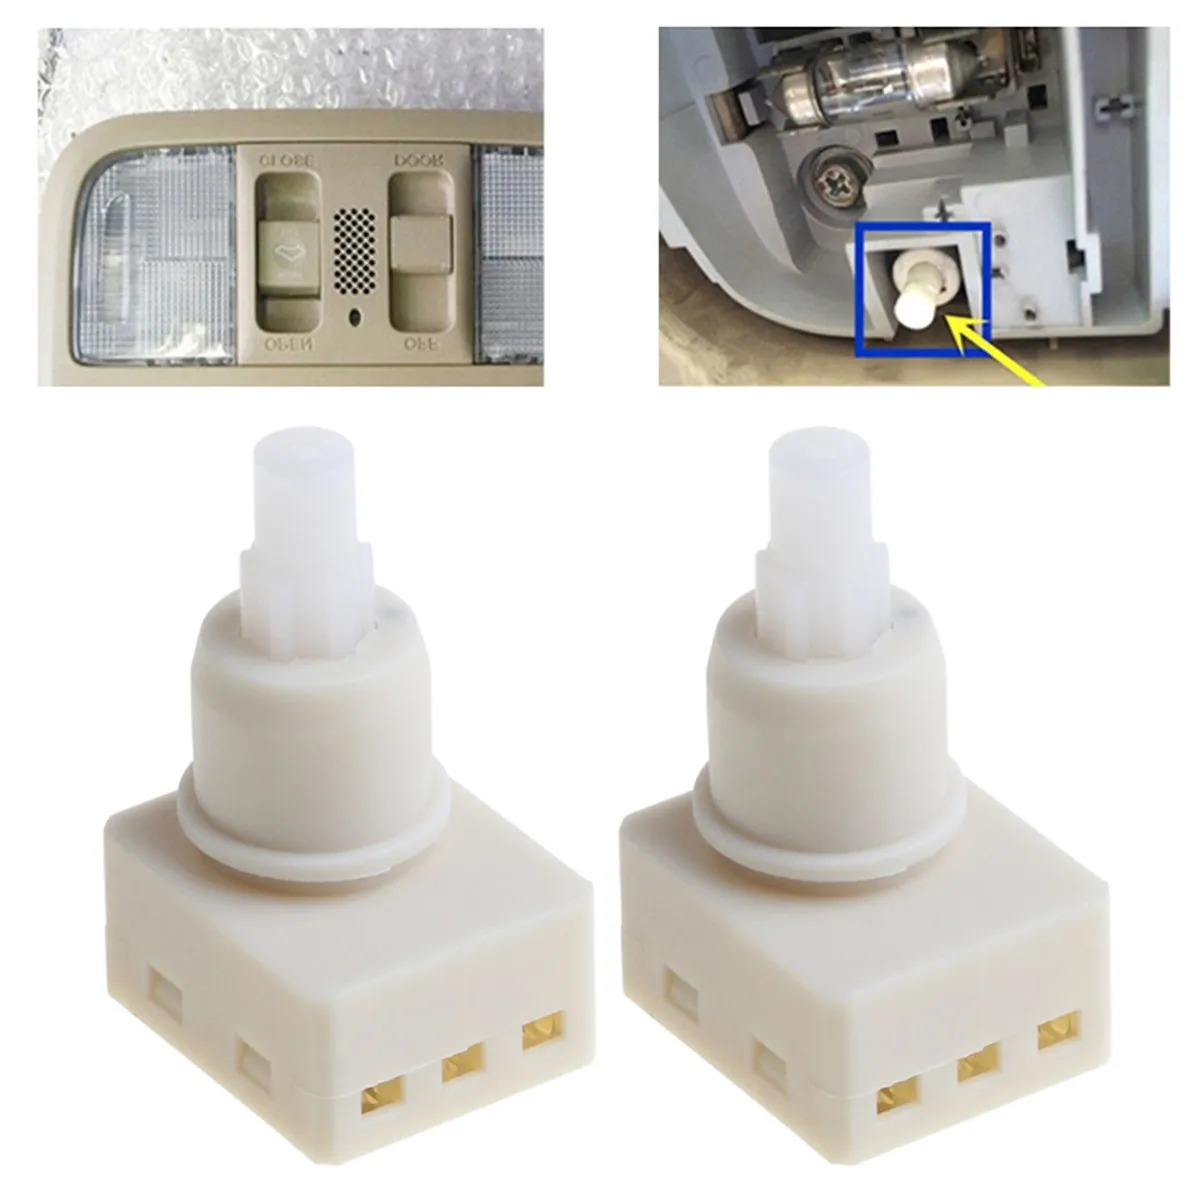 

2 Pcs Interior Dome Light Lamp Switch for Honda Accord CR-V Pilot Odyssey Pilot Ridgeline Acura TSX 34404-SDA-A21 924-798